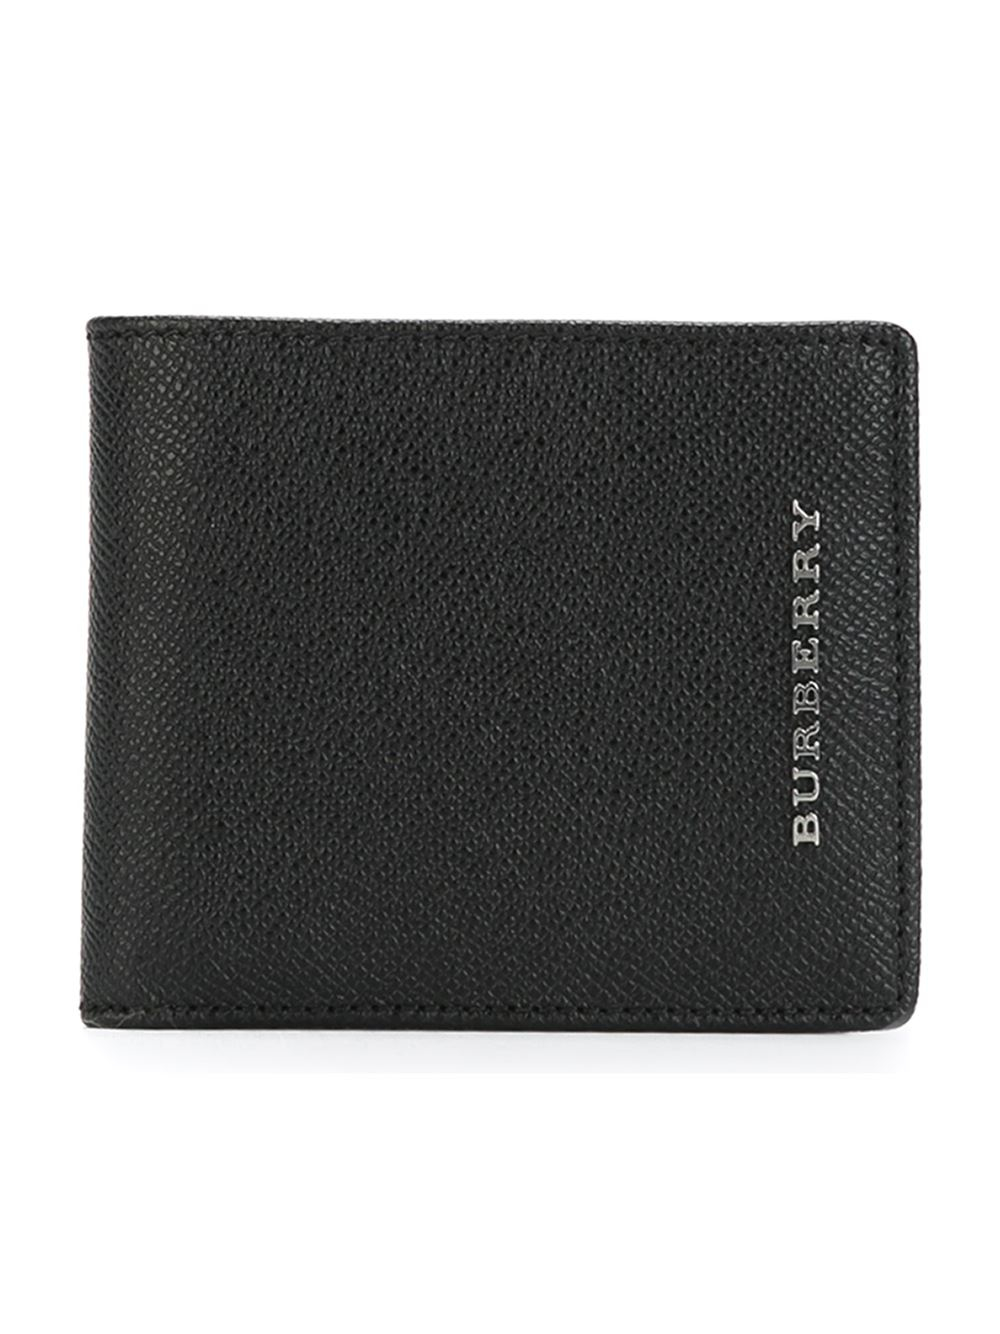 burberry wallet mens sale